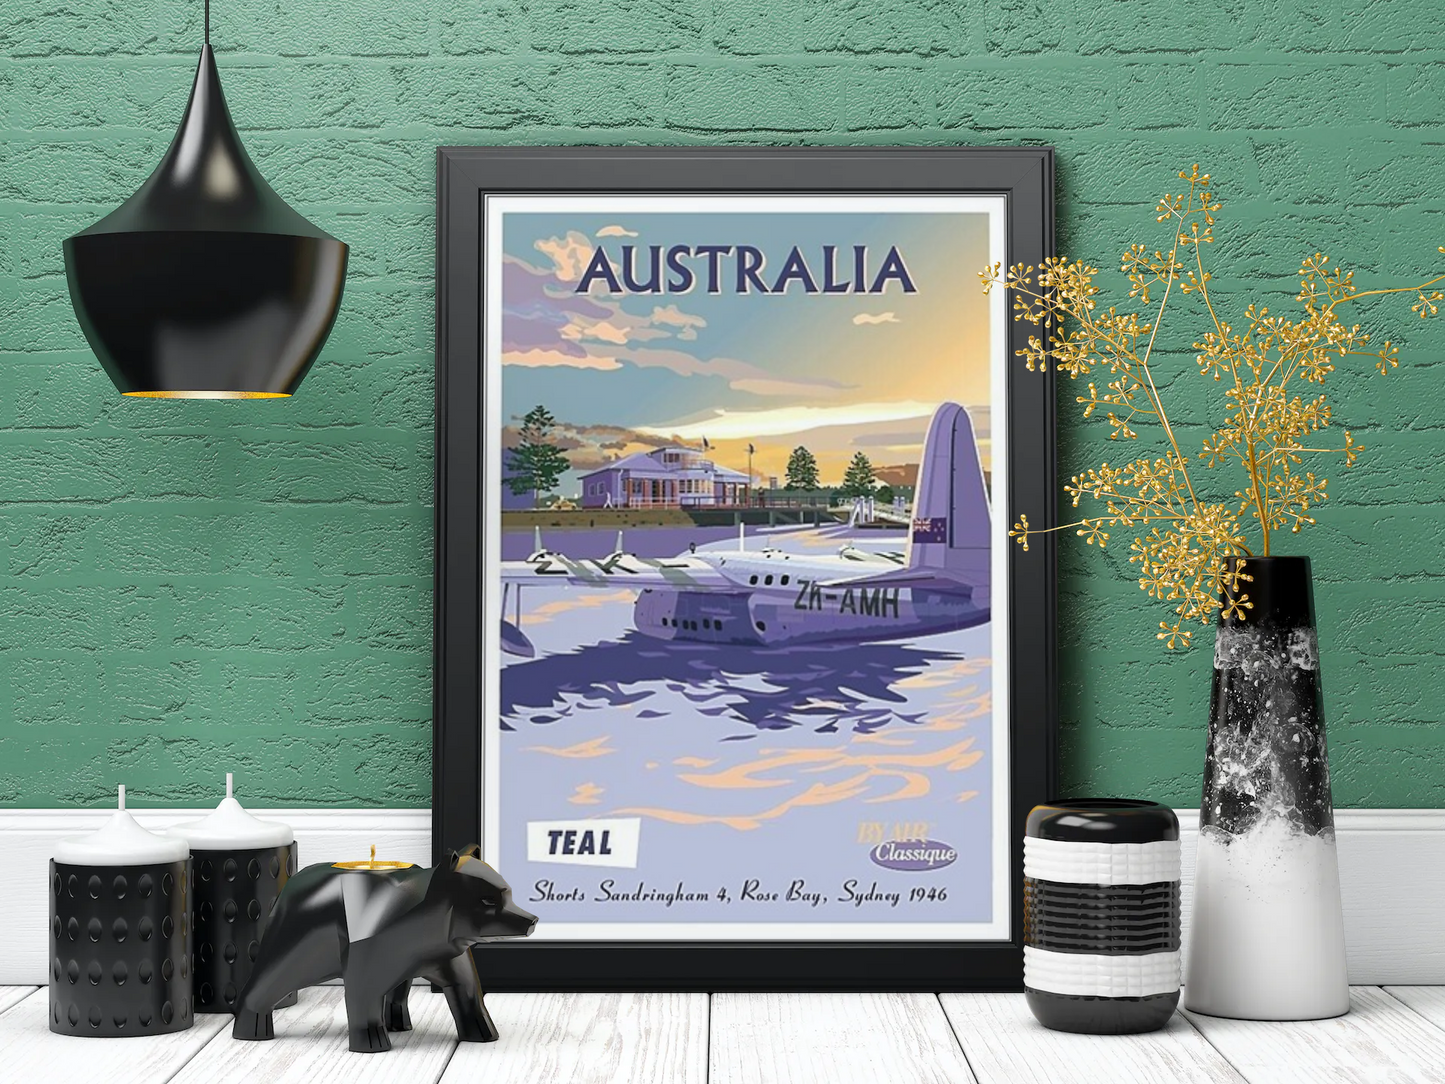 Vintage Australian Seaplane Poster